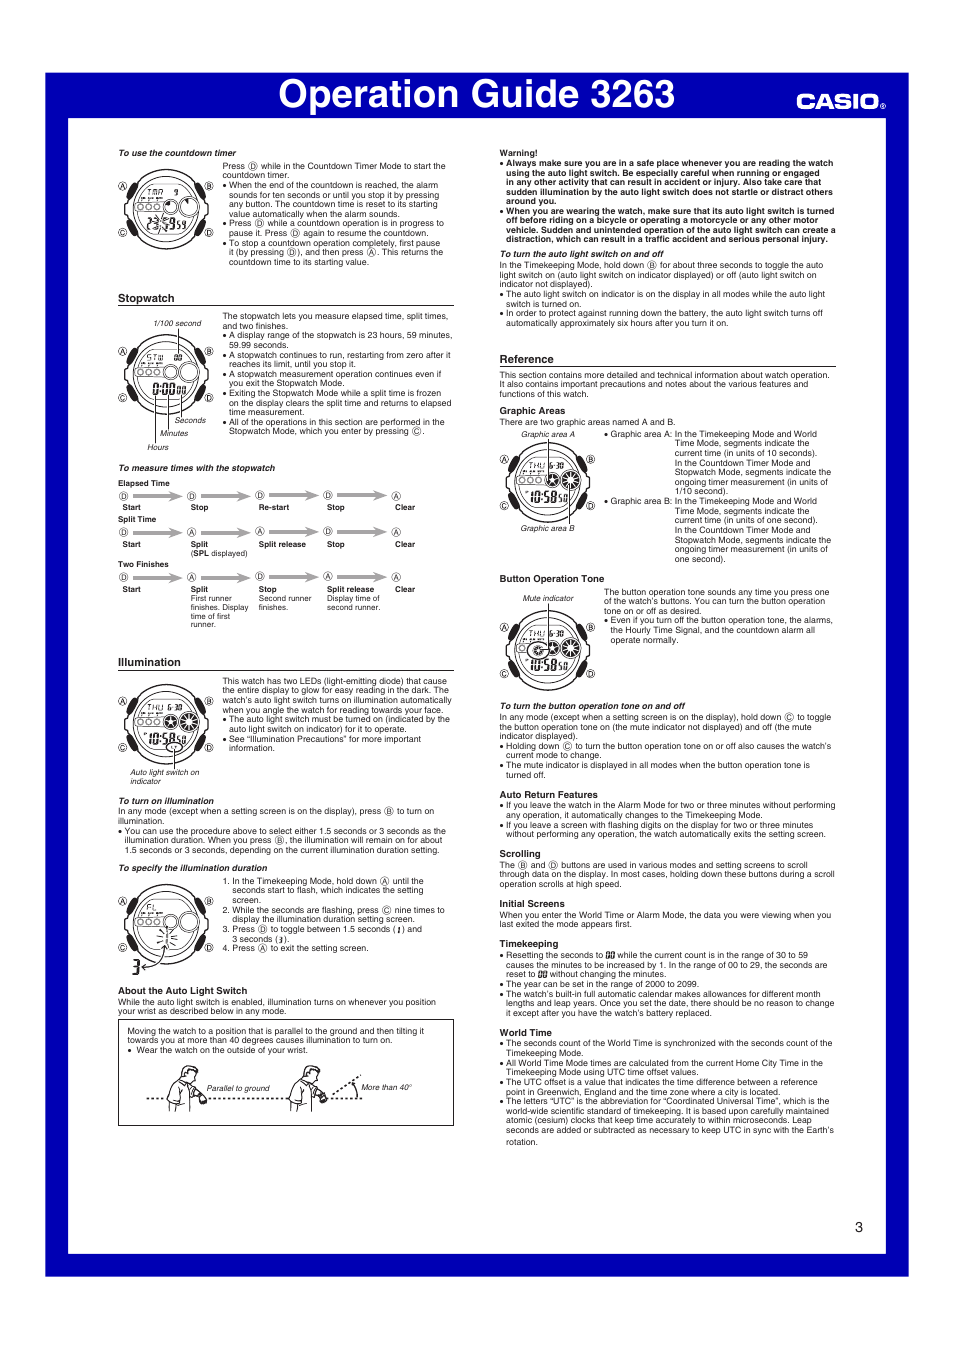 Escepticismo Quedar asombrado partes Stopwatch, Illumination, Reference | G-Shock GD-100 User Manual | Page 3 /  4 | Original mode